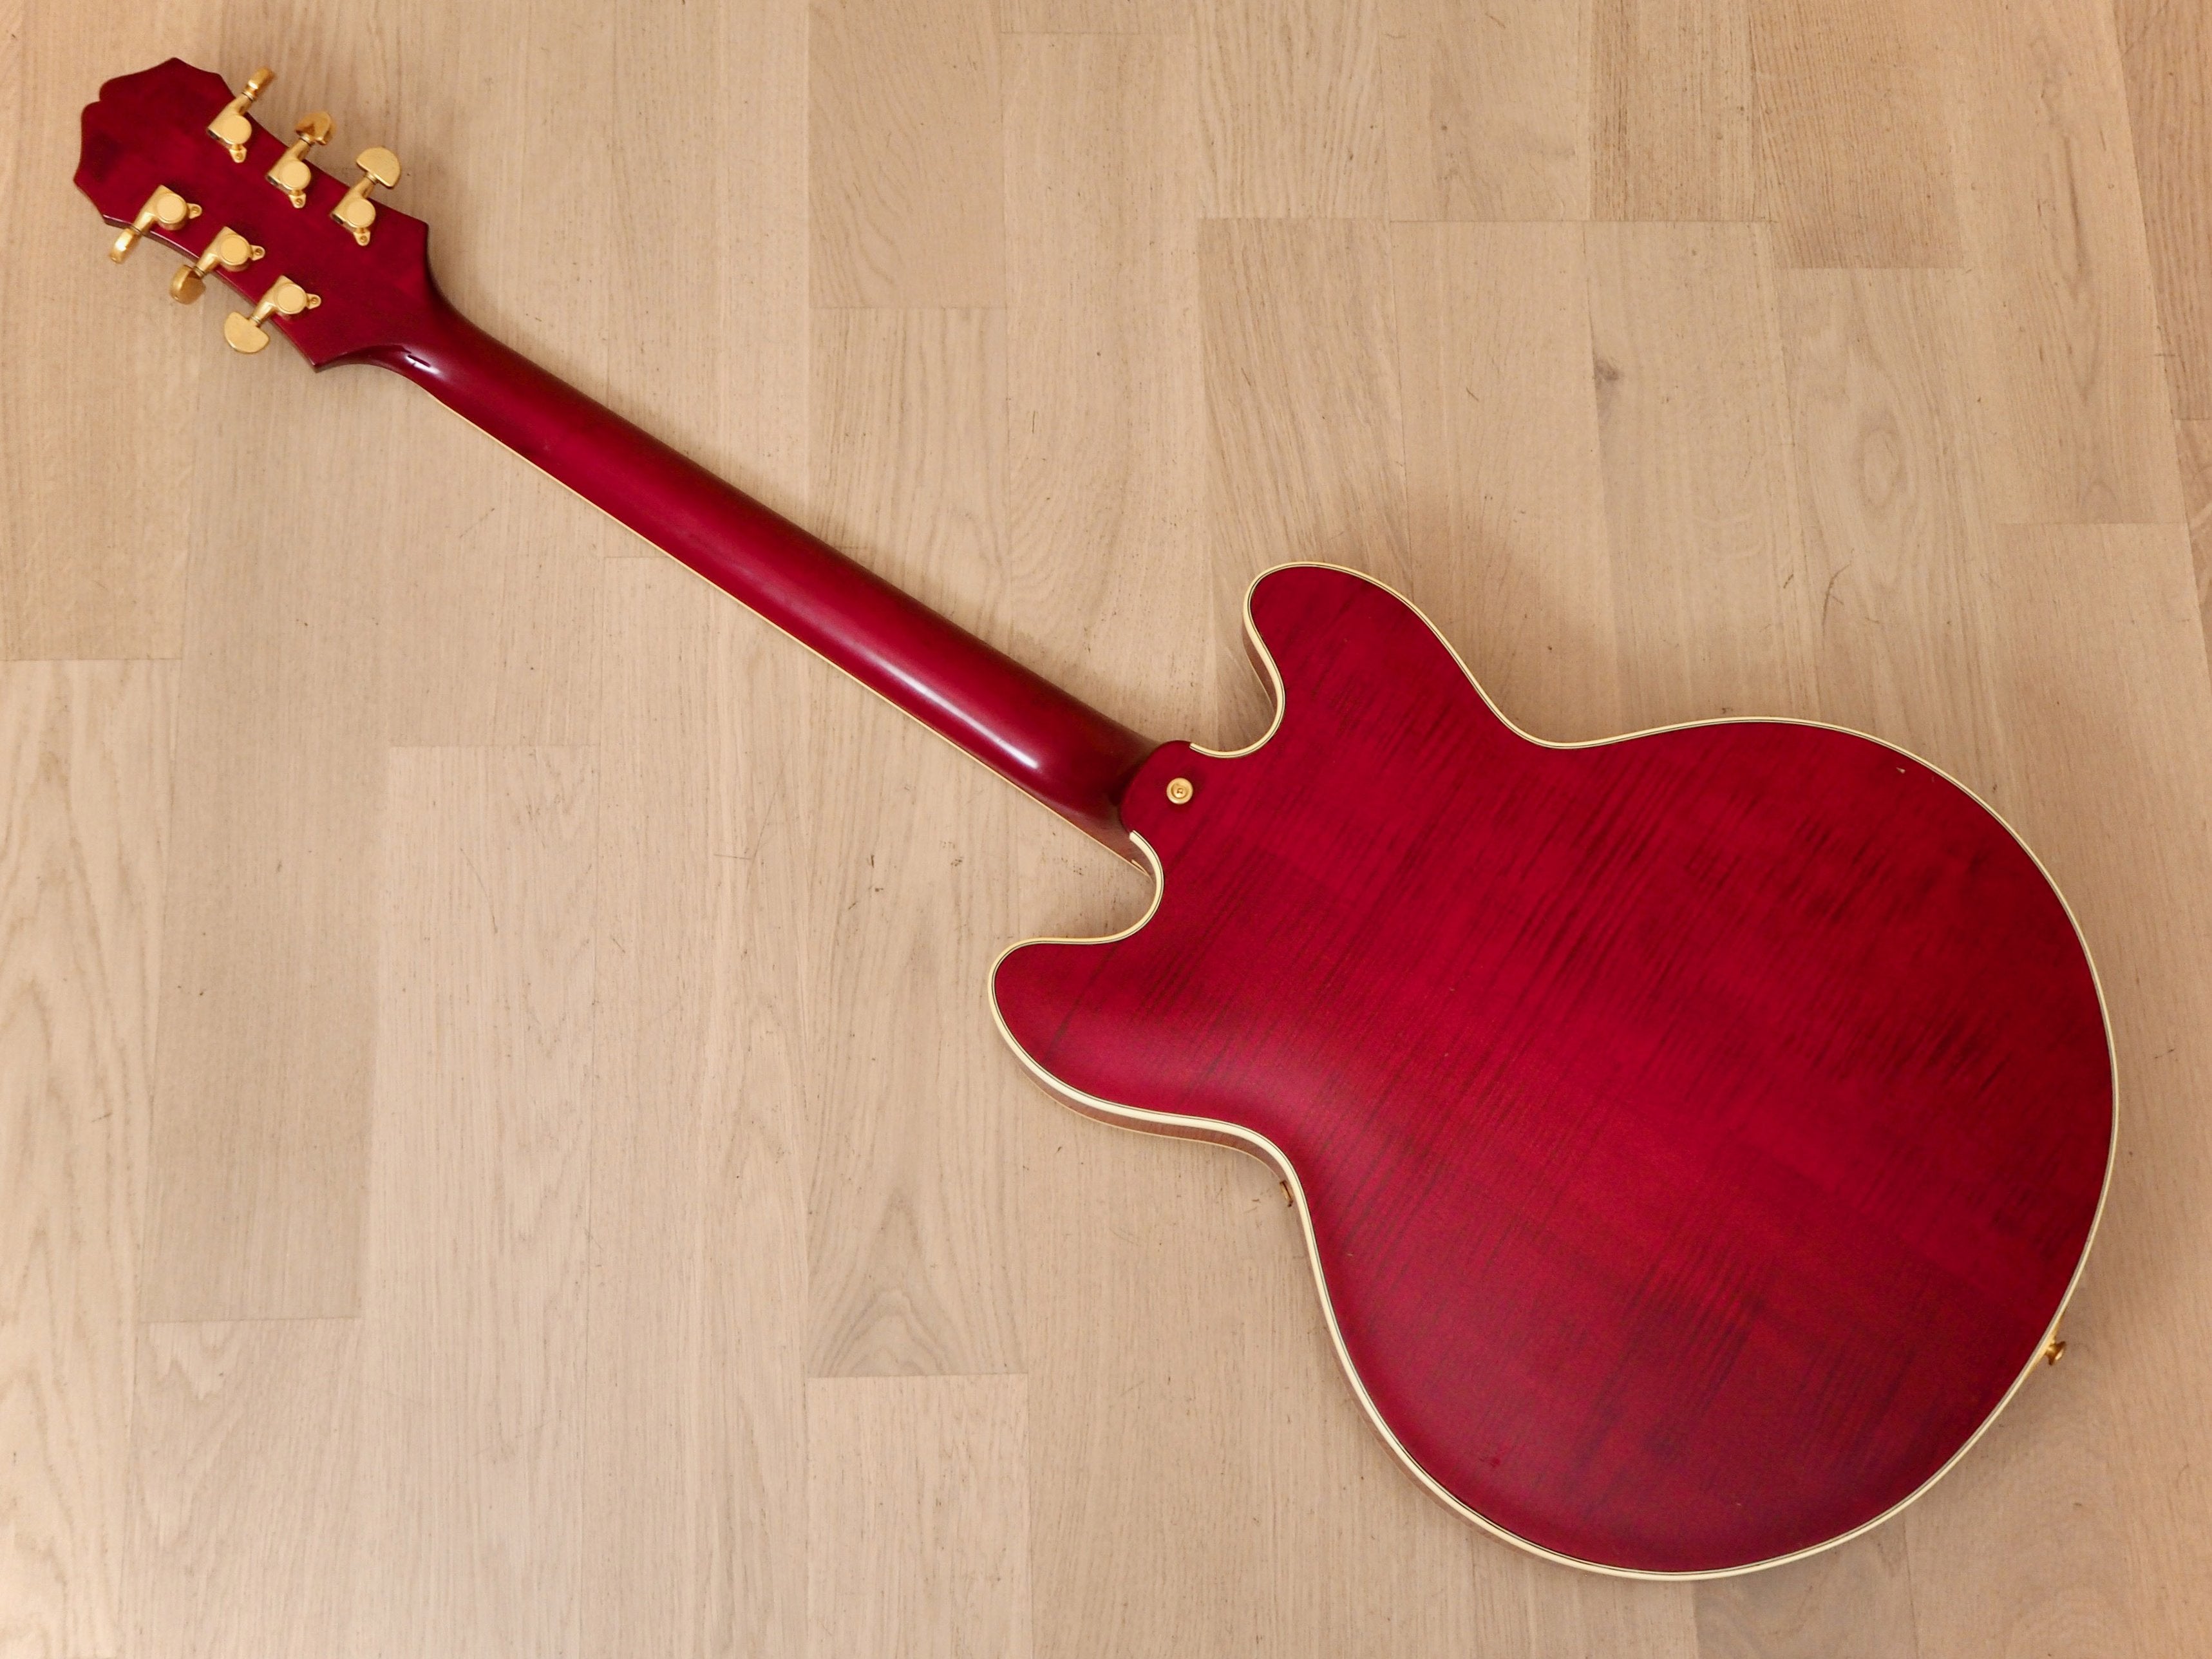 1993 Epiphone Sheraton Vintage Guitar Cherry, 100% Original w/ Case, Japan Terada